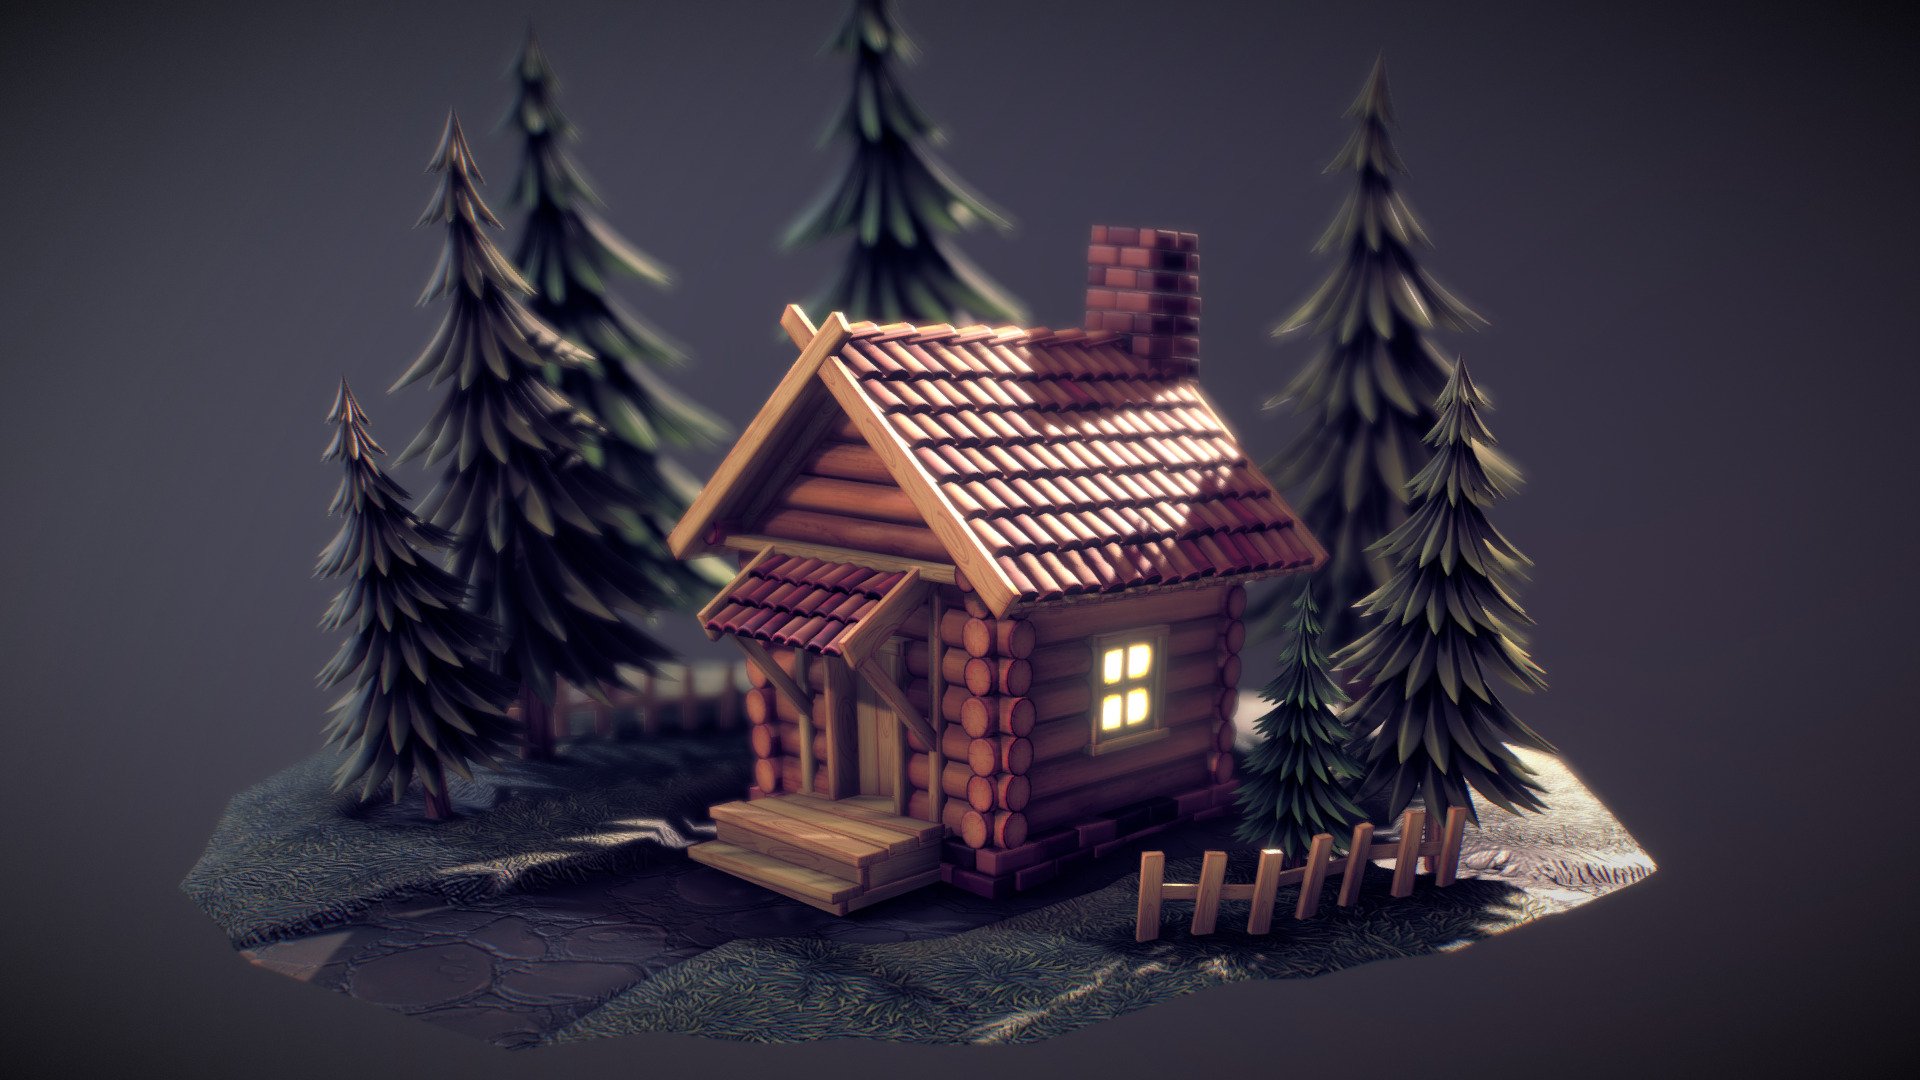 The Cabin in the Woods - 3D model by Sladegeorg 3d model